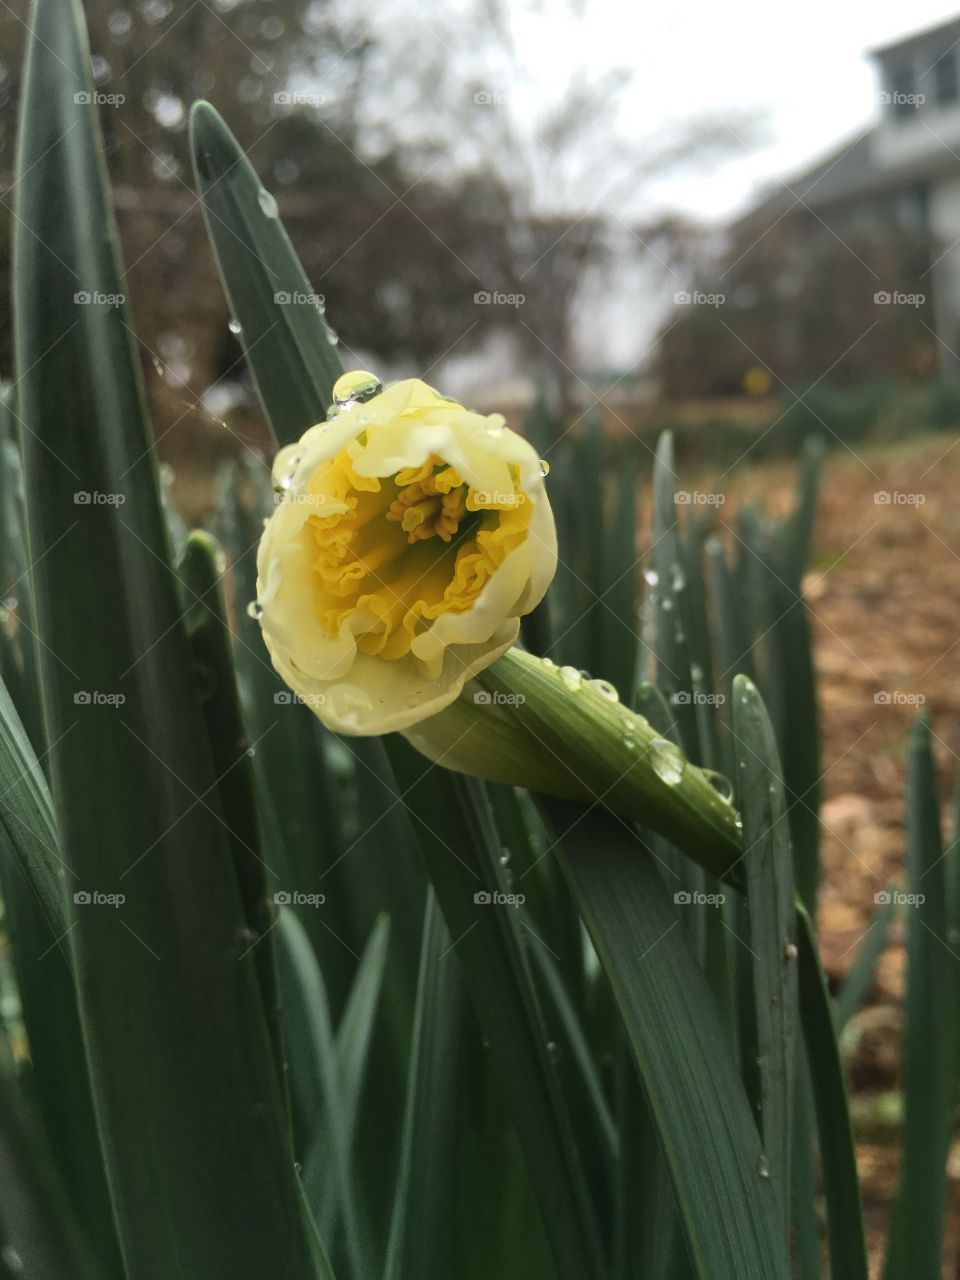 Raindrops on daffodils 